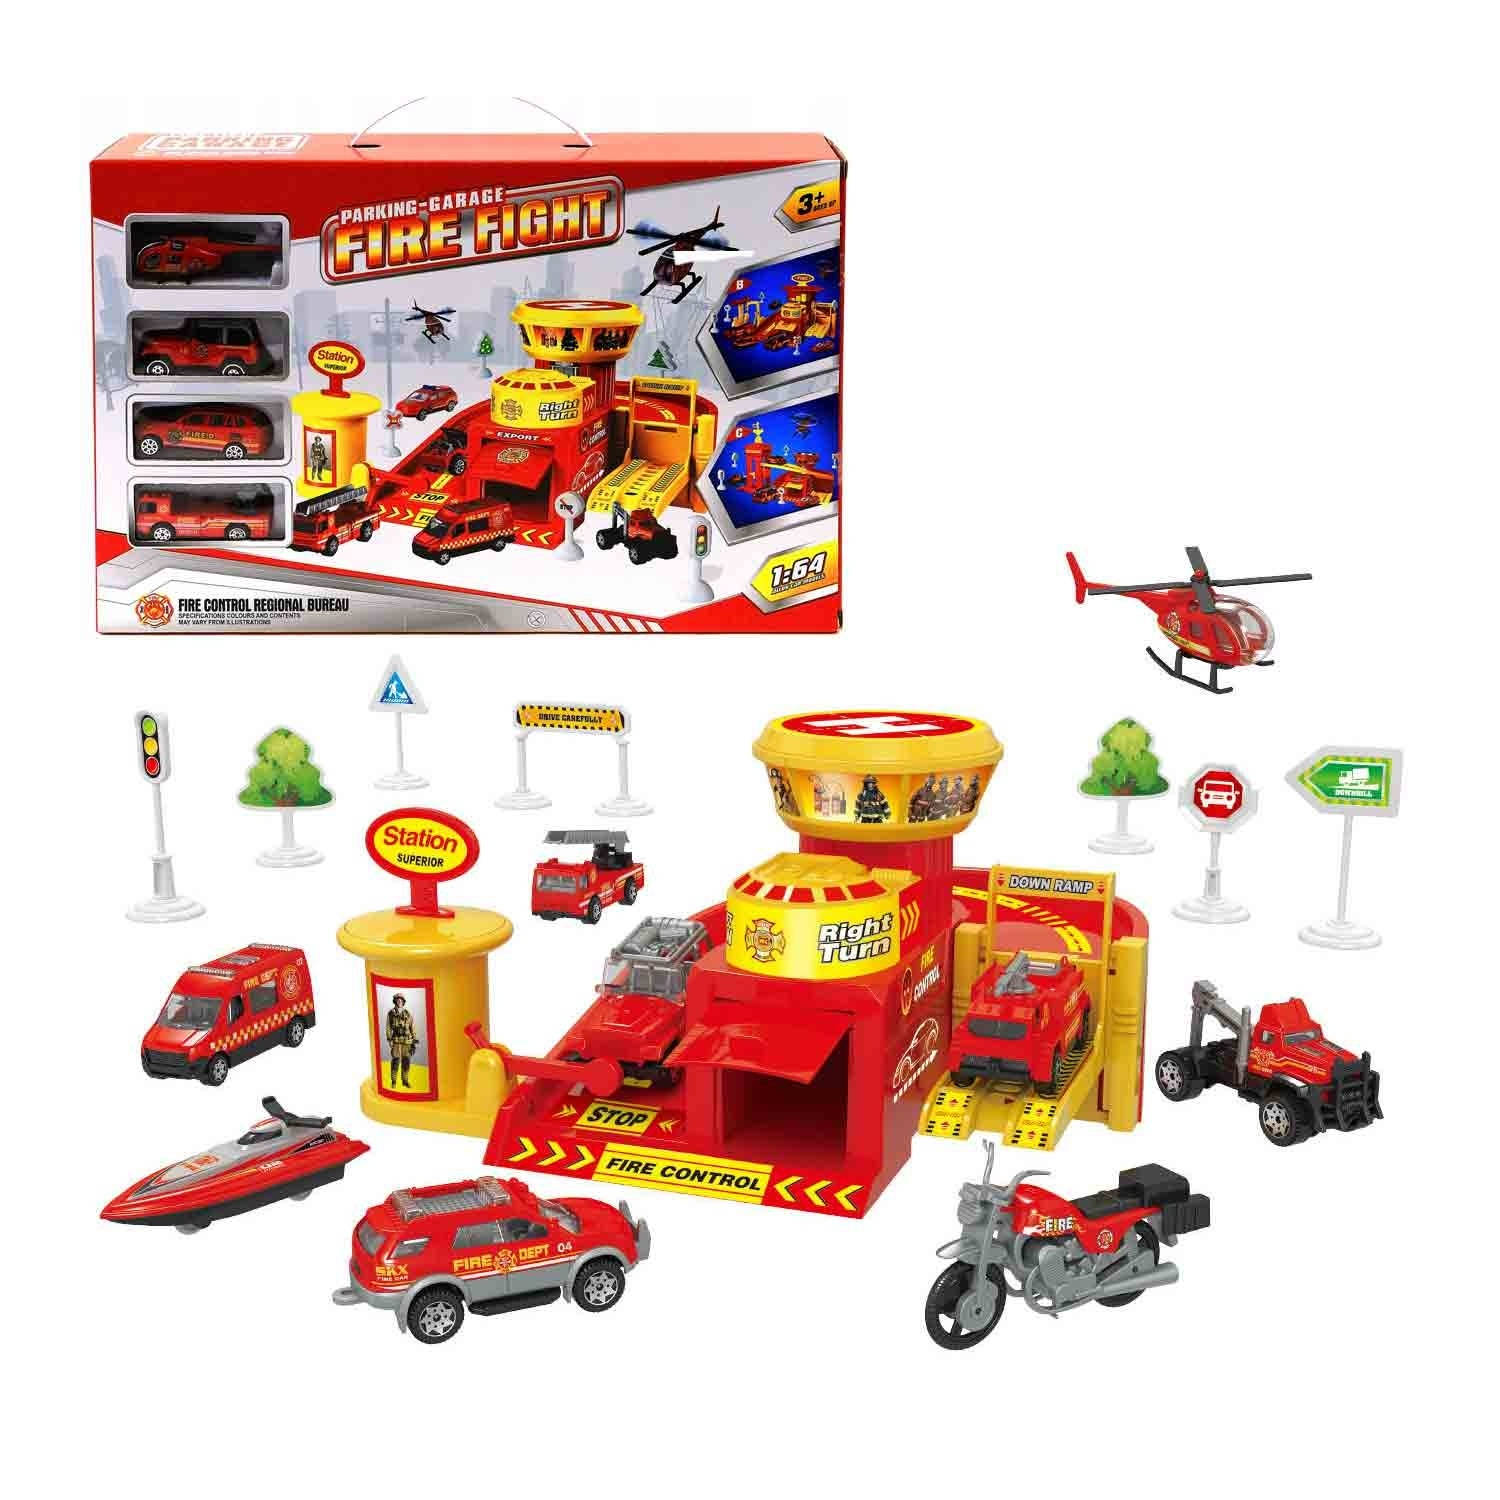 Allerion Speelgoed Garage Brandweer – Autogarage – Met Brandweer Auto Speelgoed – Voor Jongens en Meisjes